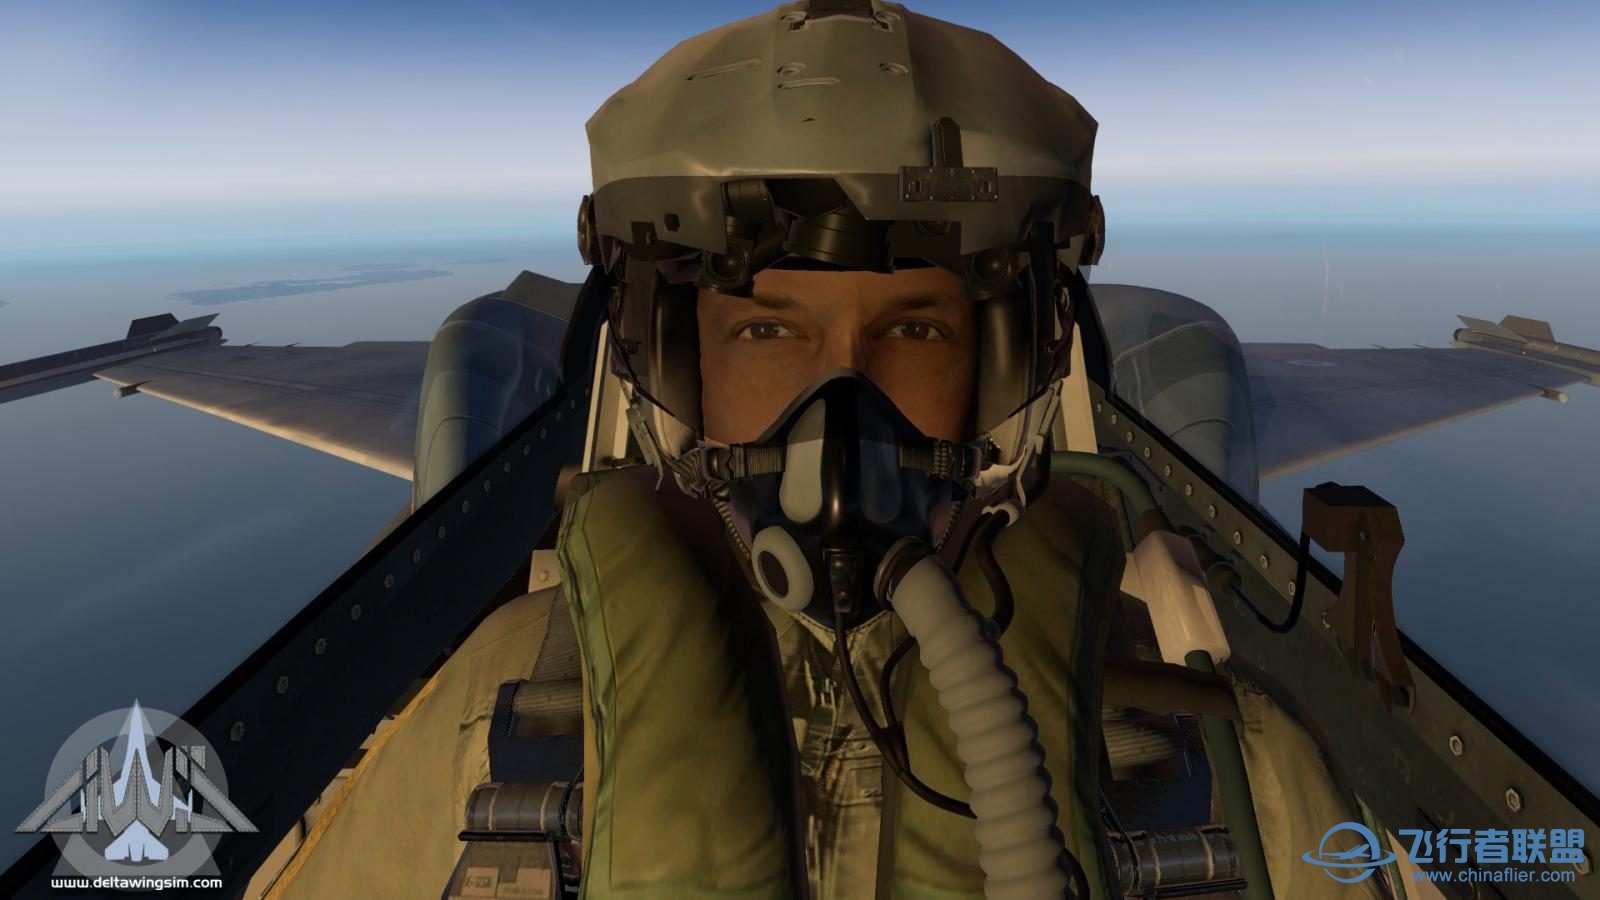 DeltaWing Simulations 发布 F-16C XPL-4009 